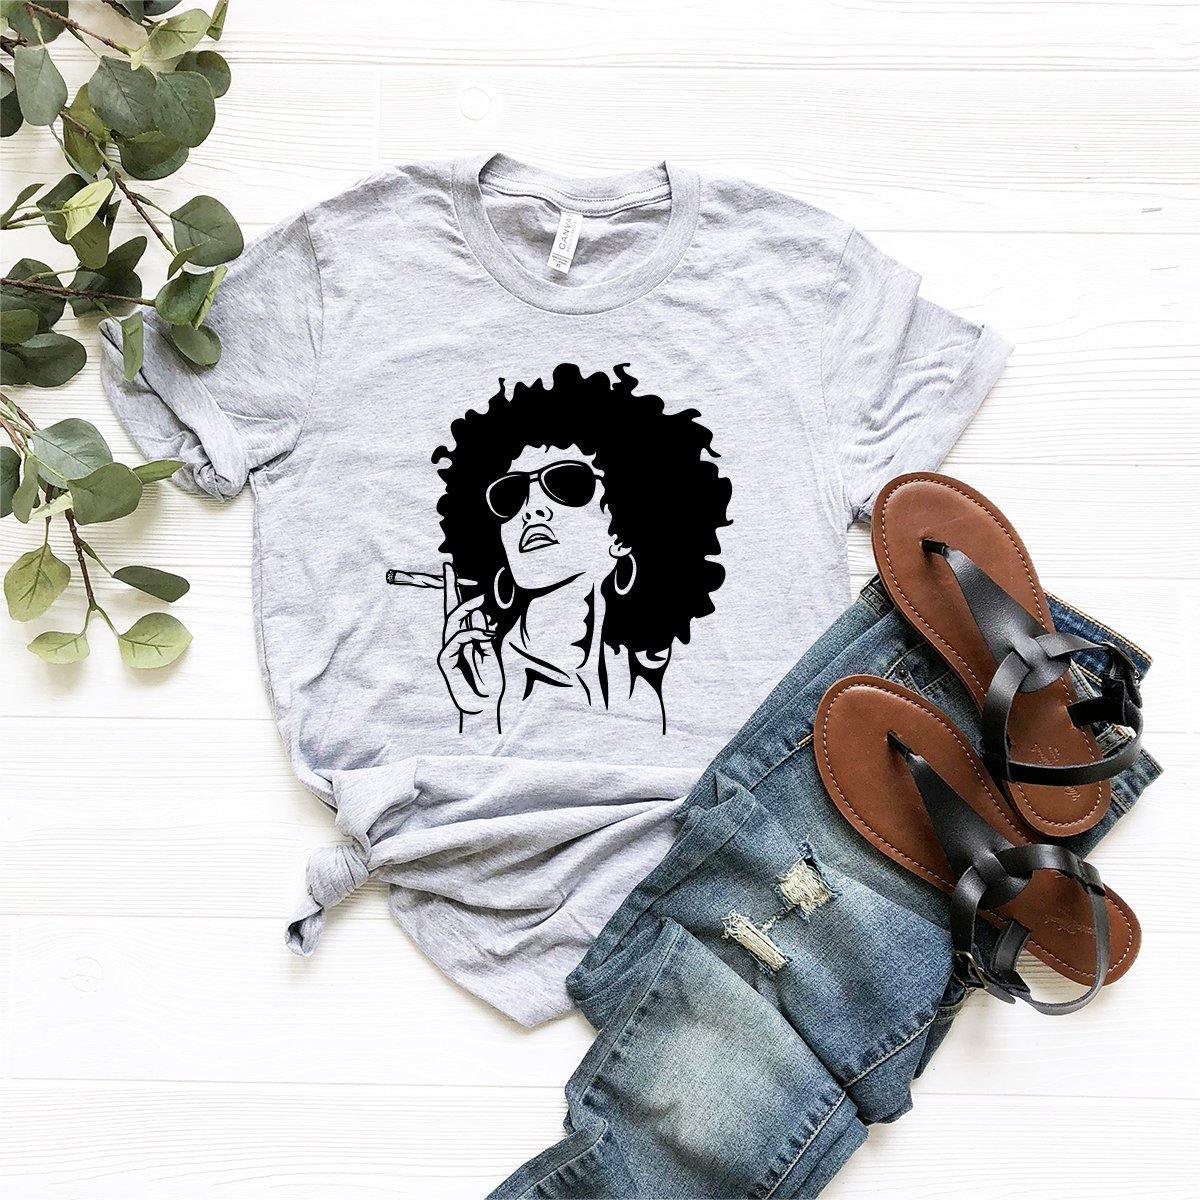 Afro Girl Shirt, Weeding Shirt,, Weeding Tee, Funny Weeding Shirt, Marijuana Girl Shirt, Stoner Shirt, Black women weed shirt - Fastdeliverytees.com